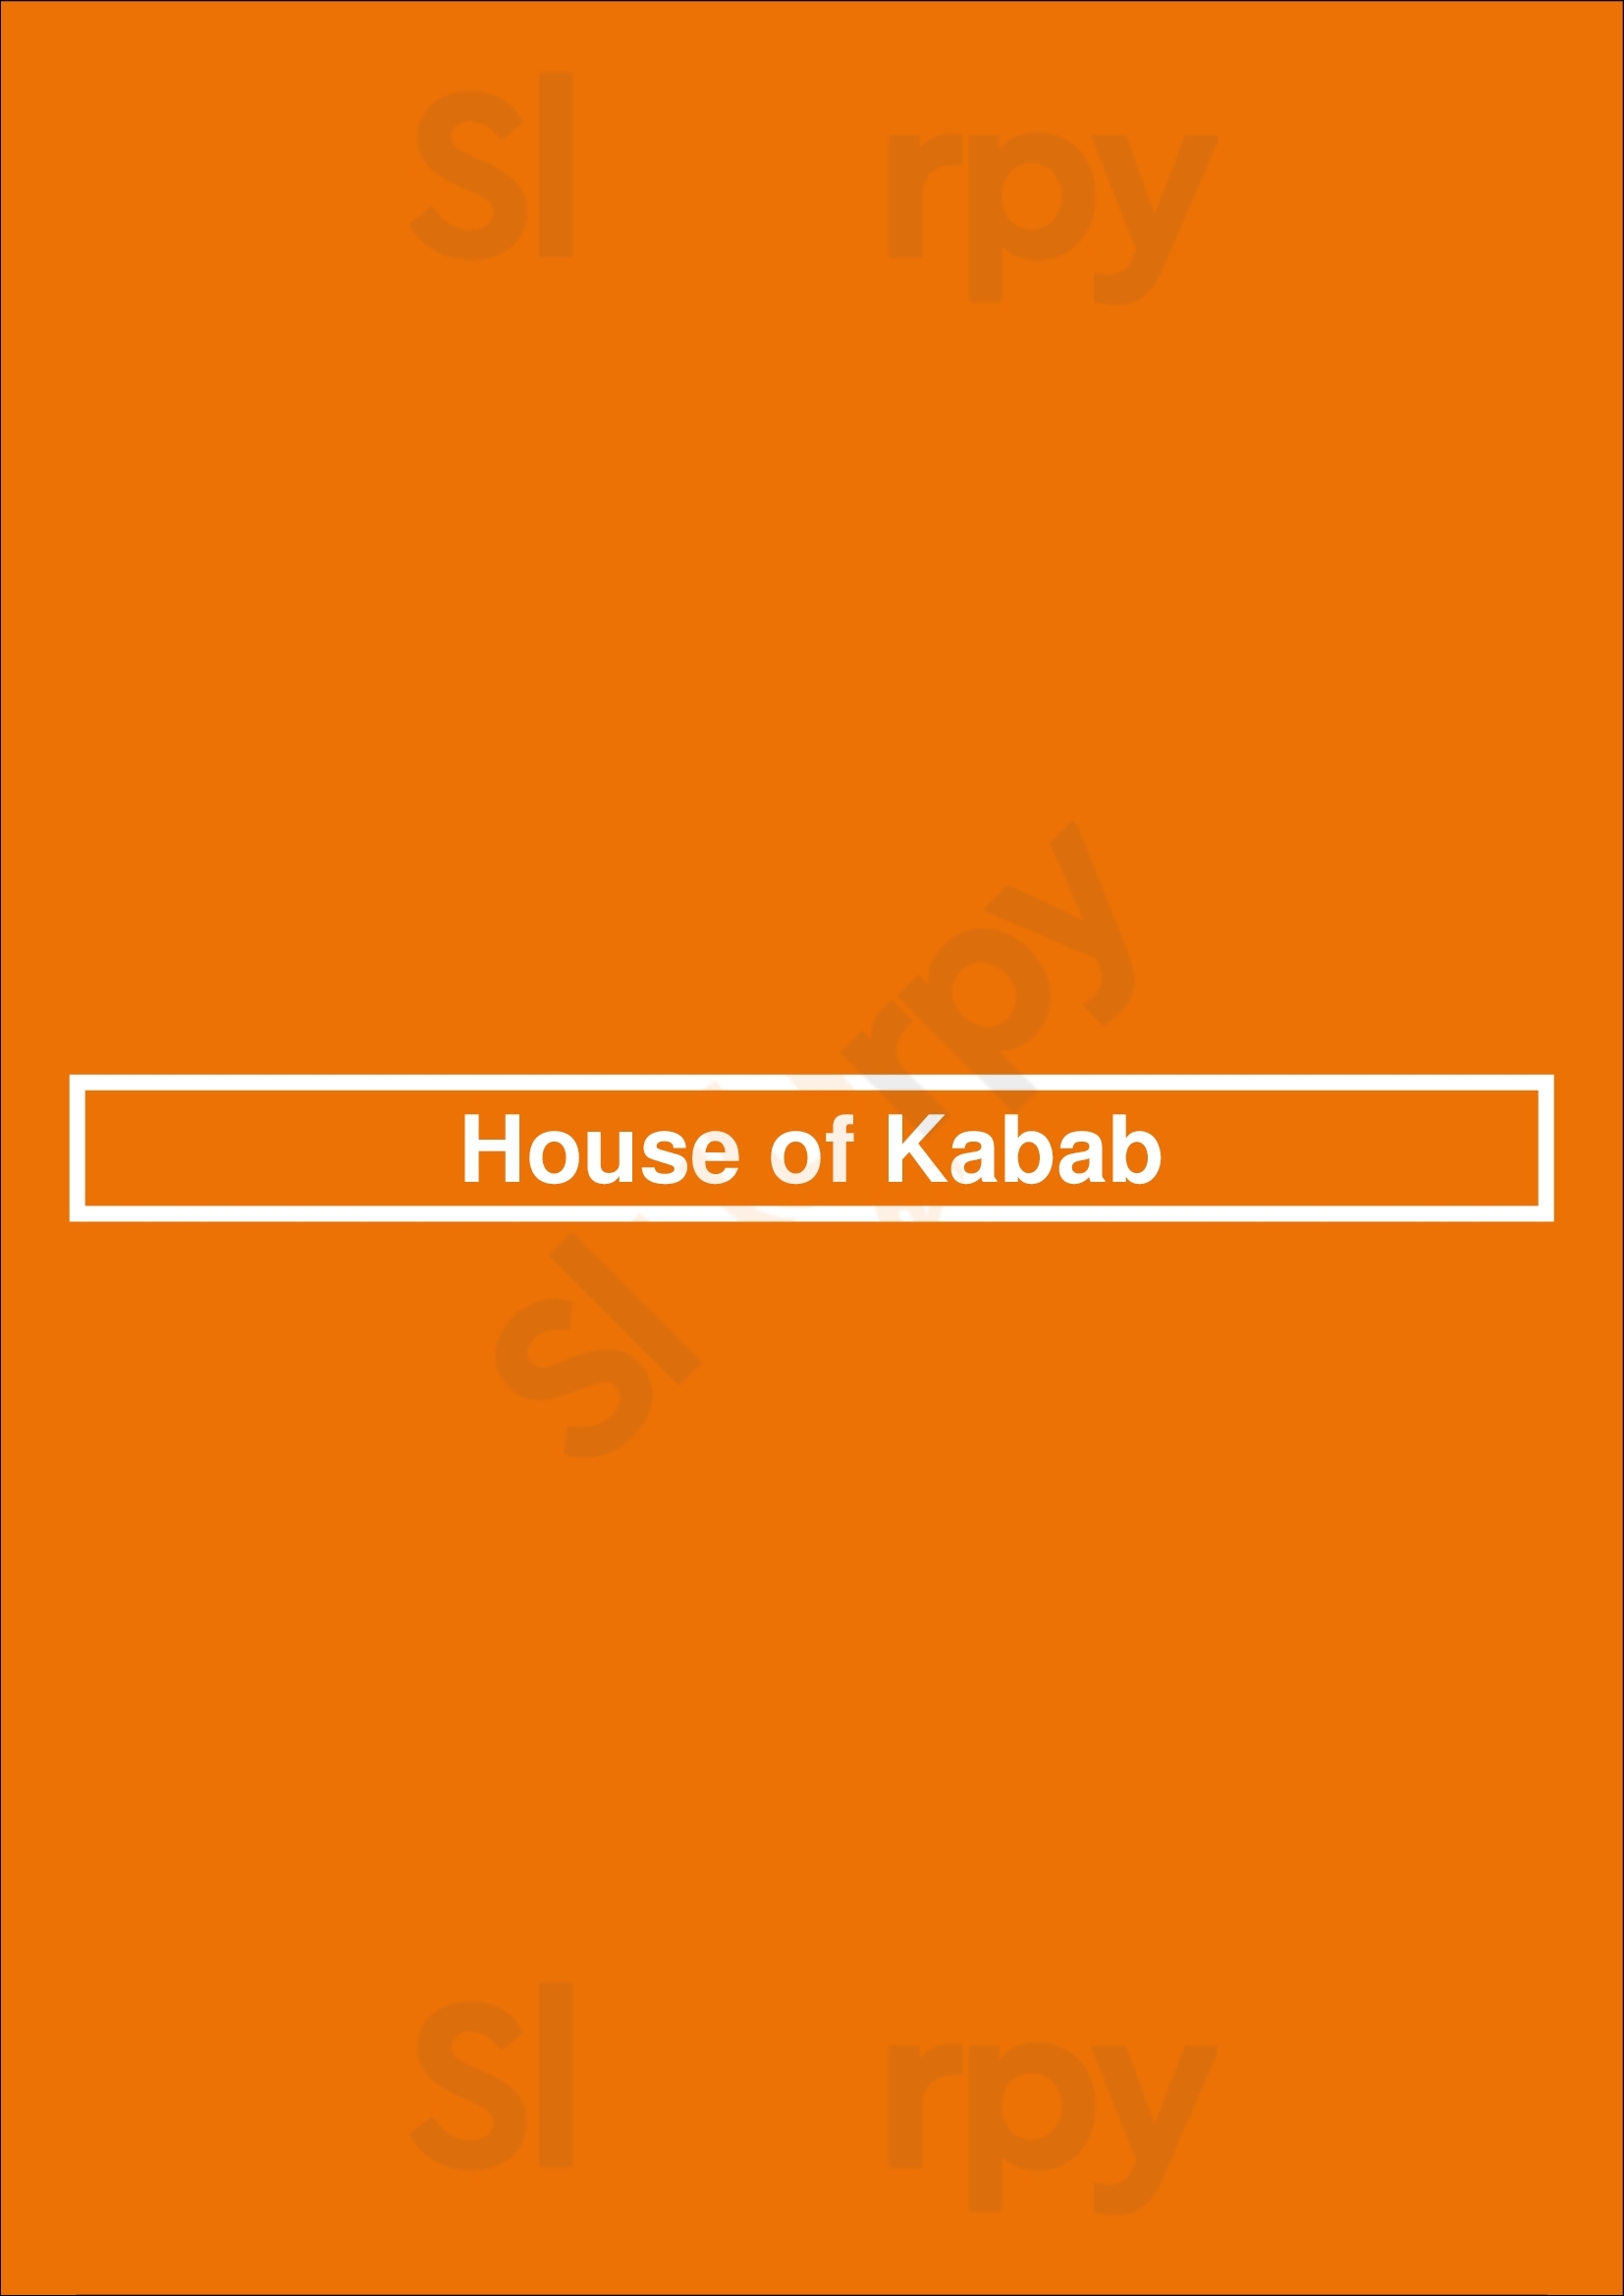 House Of Kabob Calgary Menu - 1